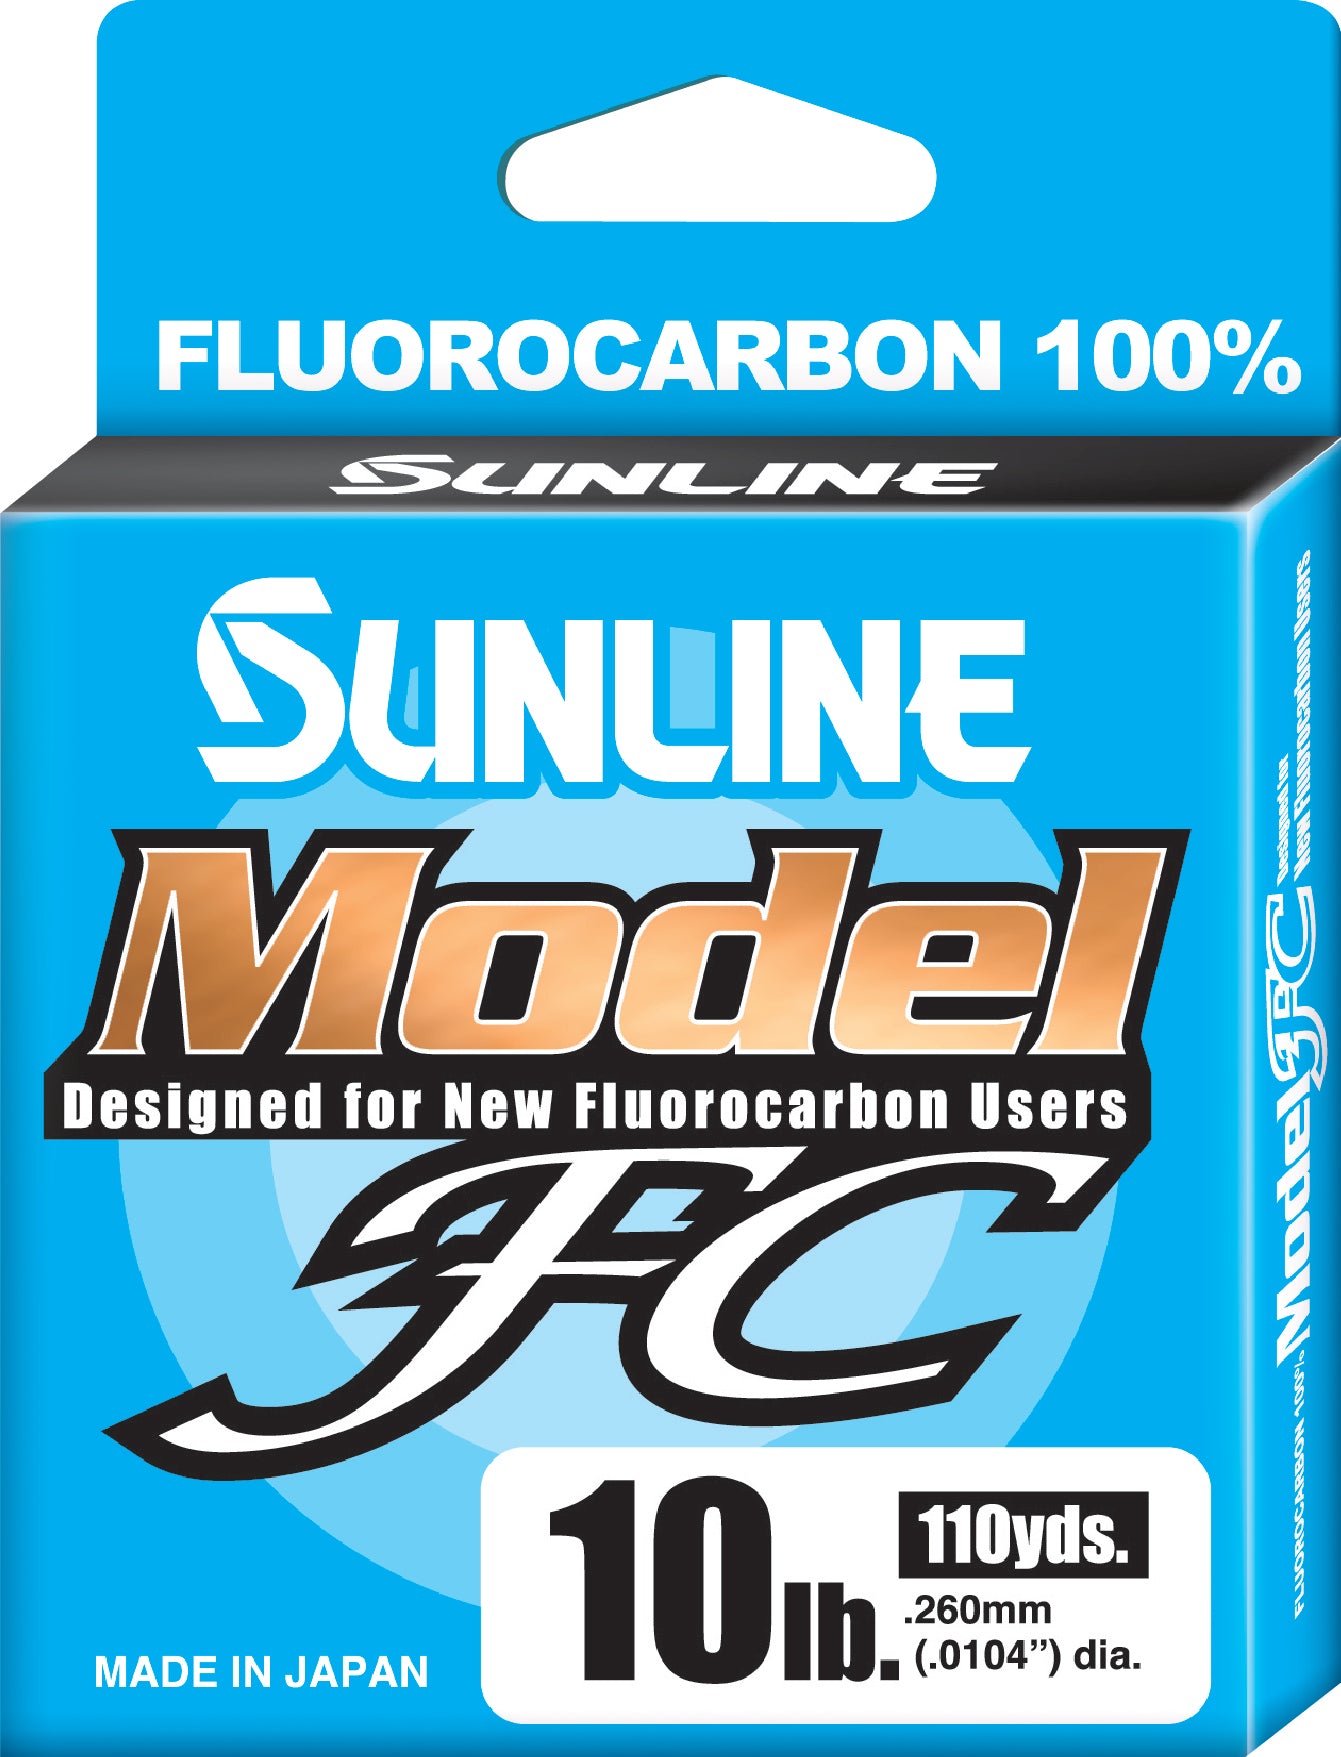 Sunline Model FC Fluorocarbon Fishing Line SKU - 627320